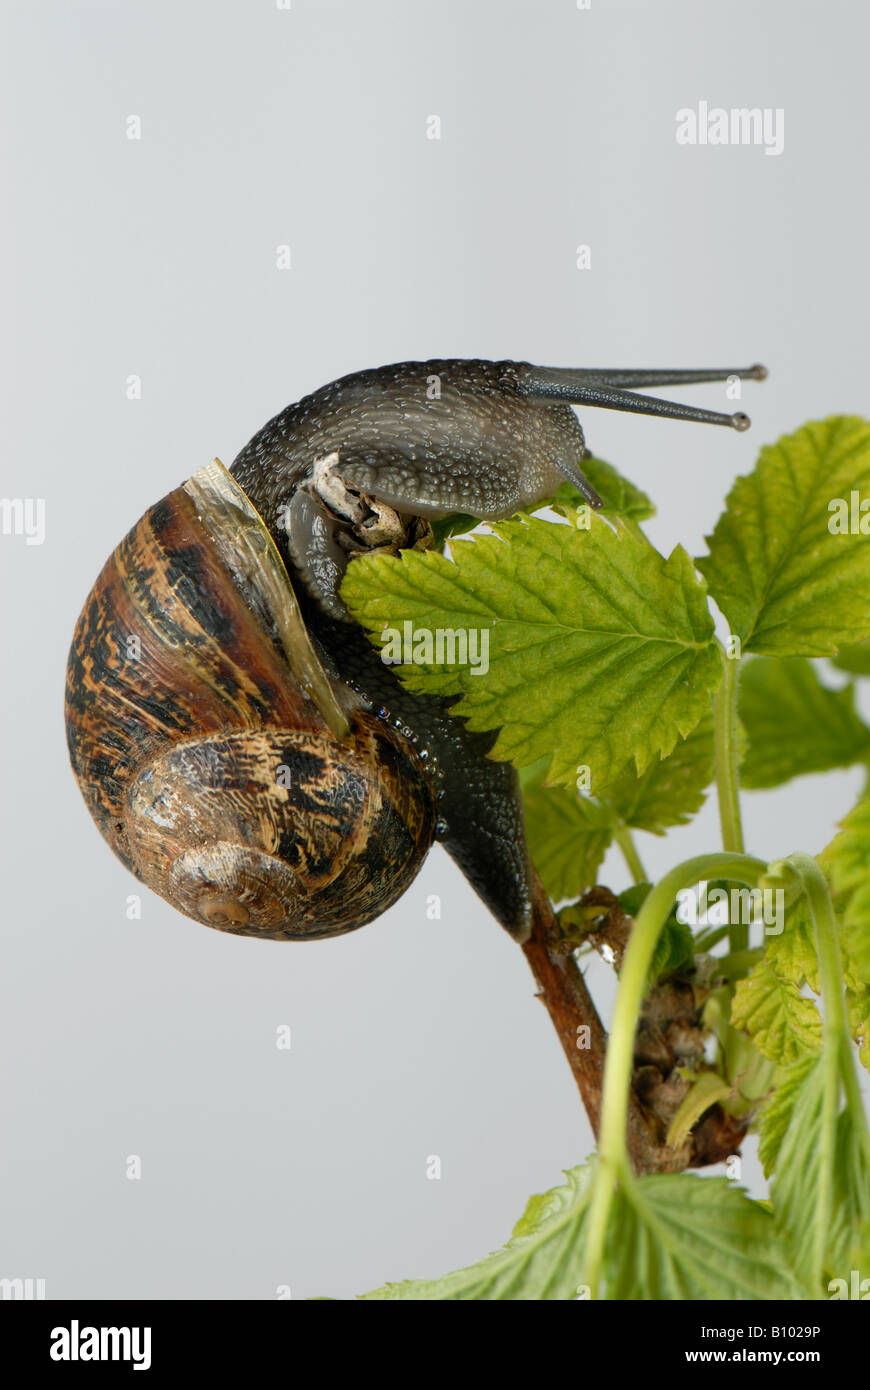 Garden snail Cornu aspersum climbing over young raspberry leaves Stock Photo